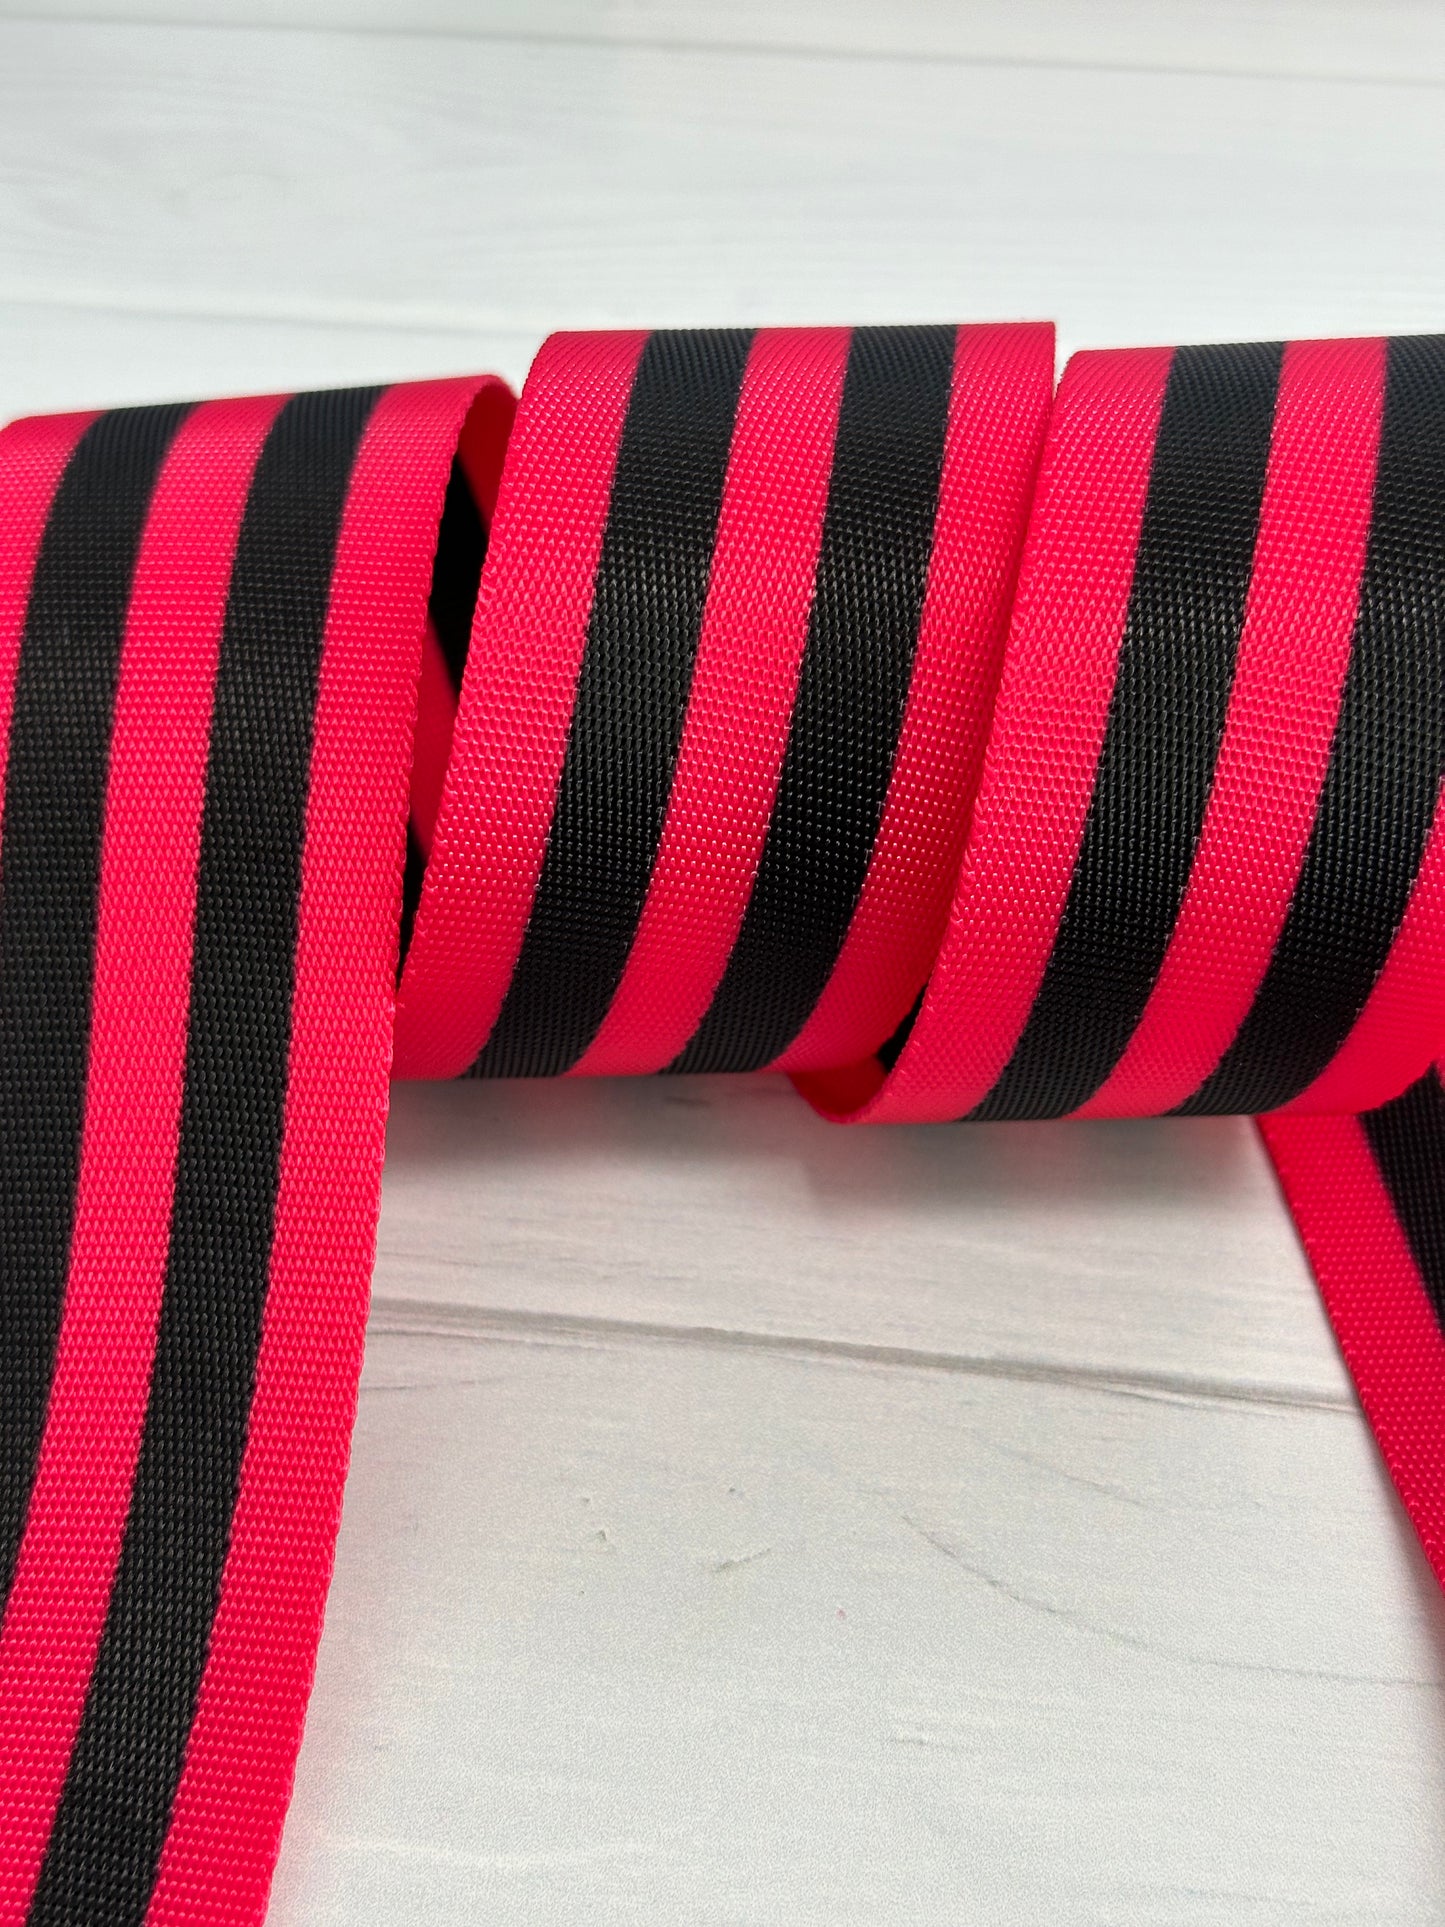 Hot Pink and Black Stripe 1.5” Seatbelt Webbing